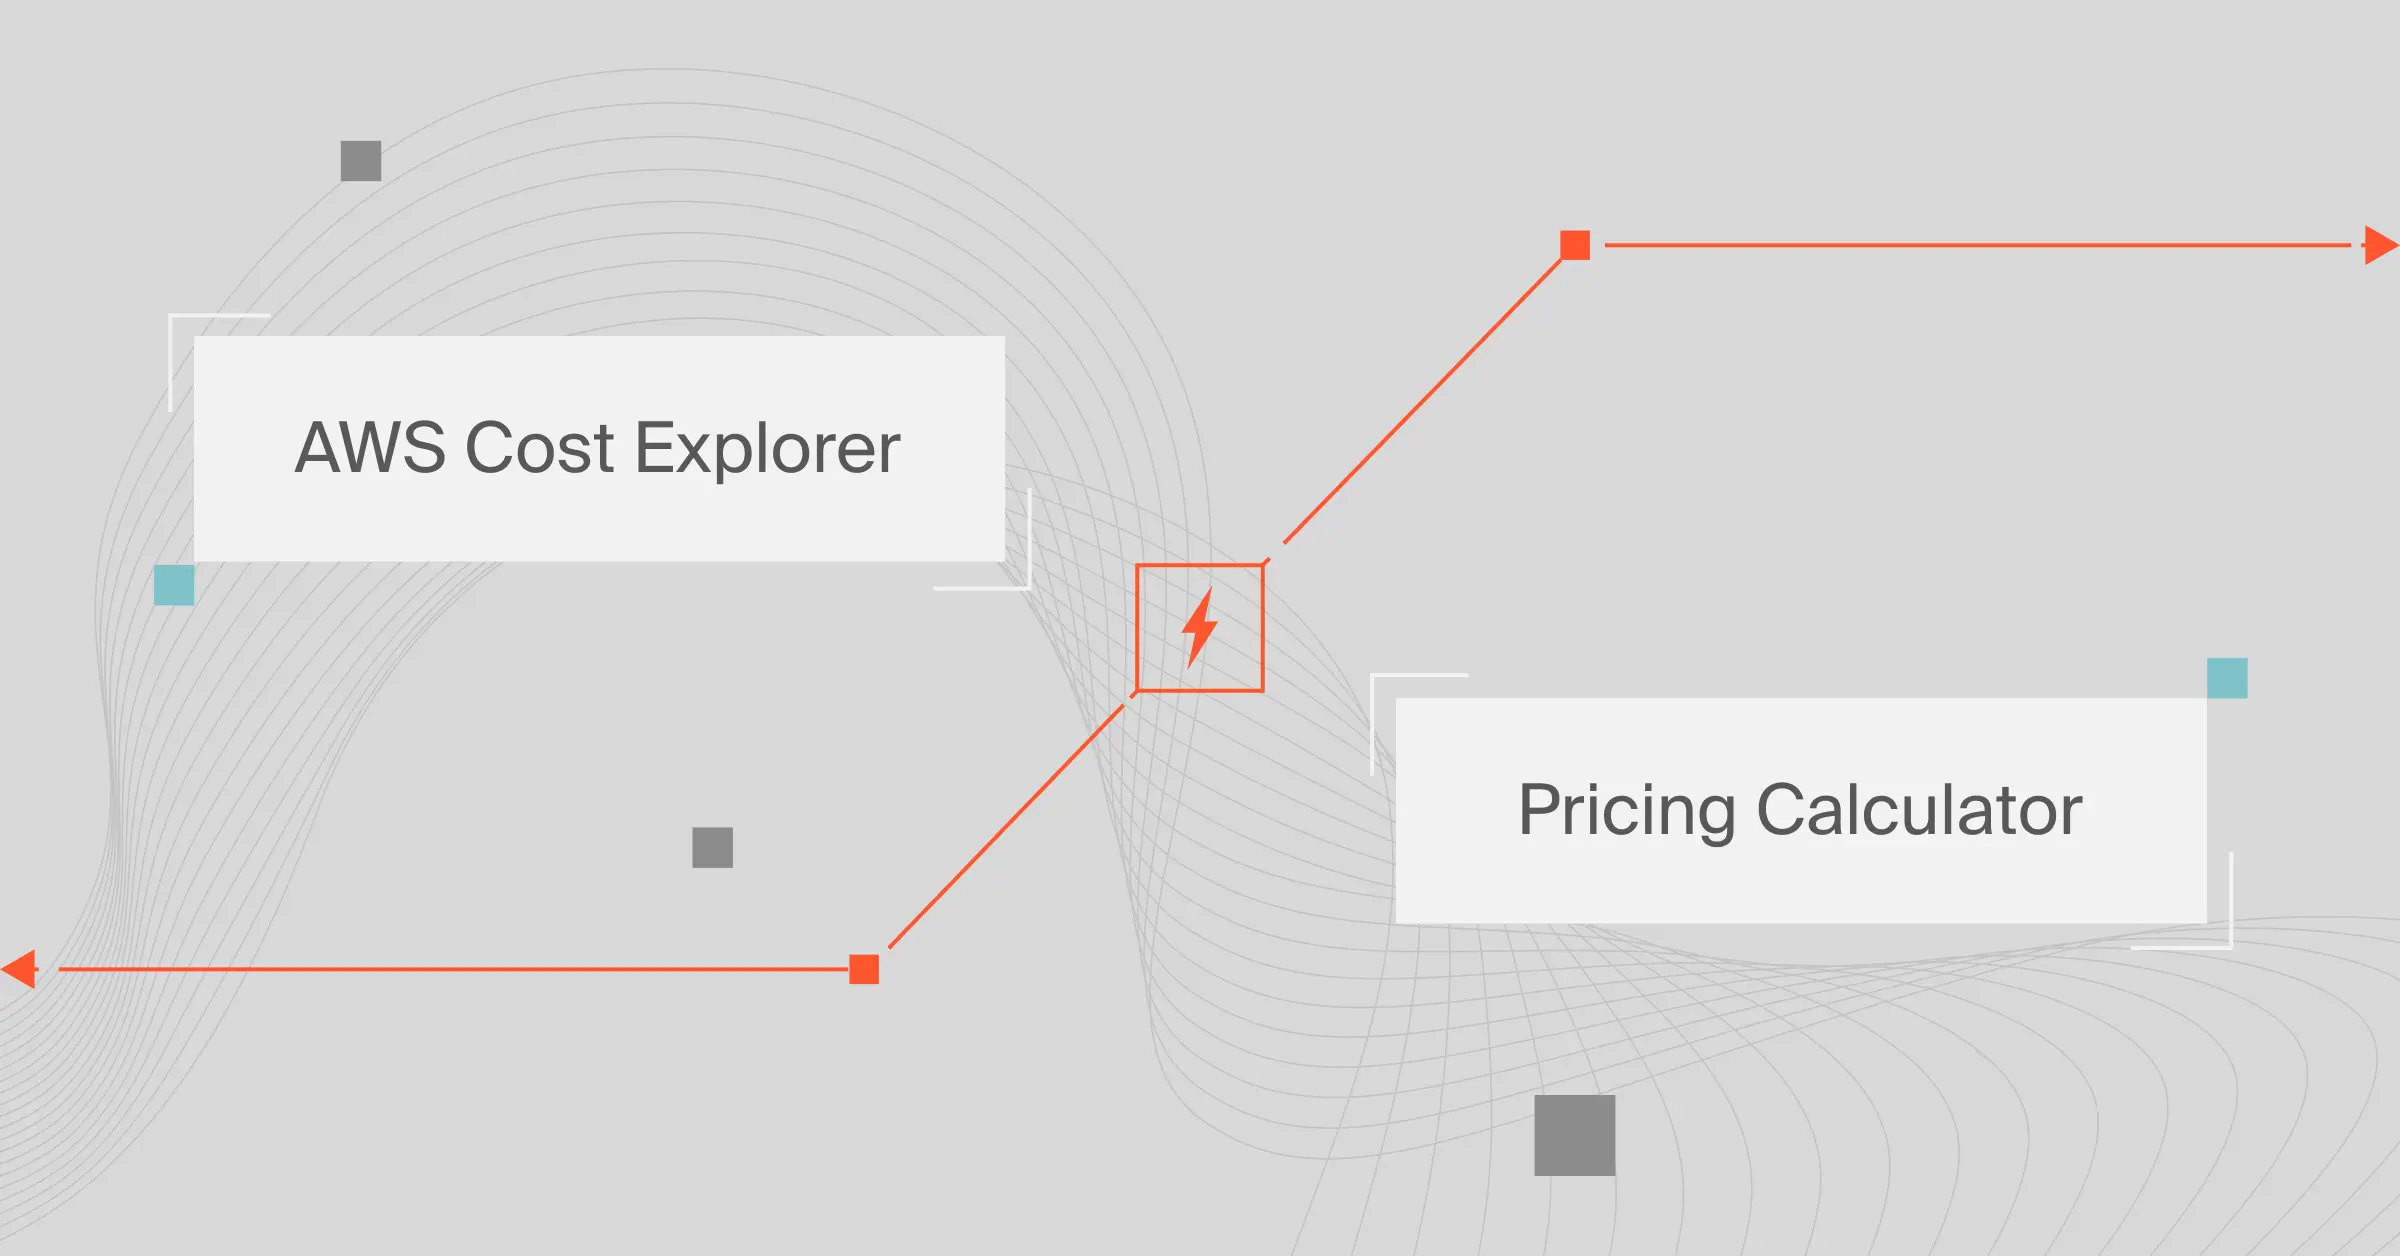 Cost Explorer Vs. Pricing Calculator